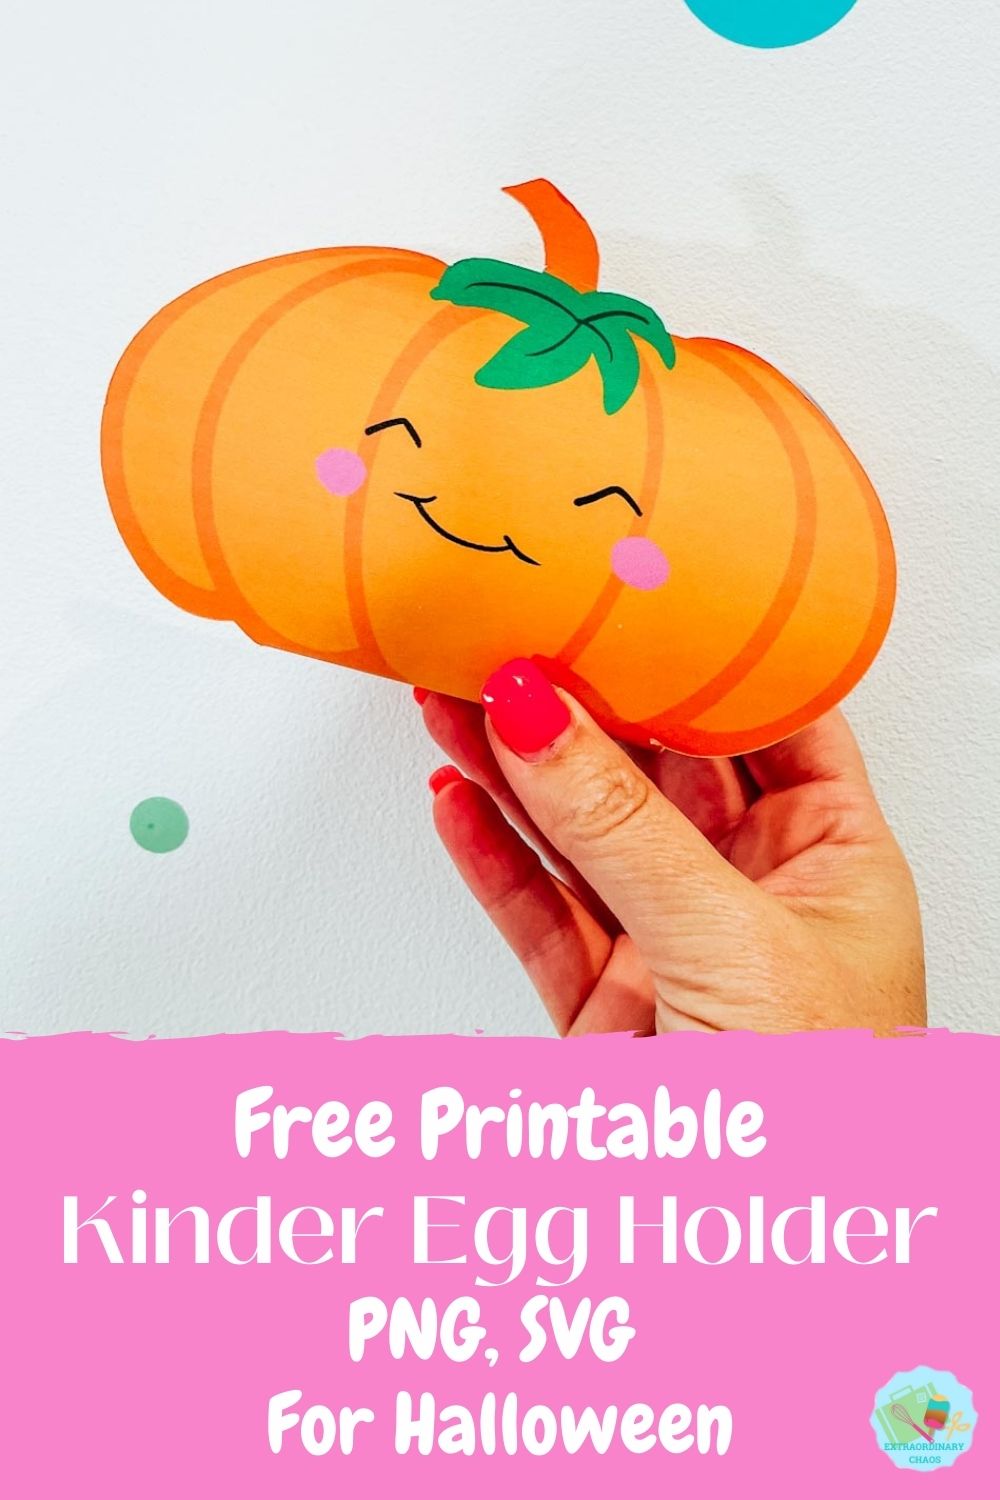 Free printable kinder egg holders for halloween trick or treating